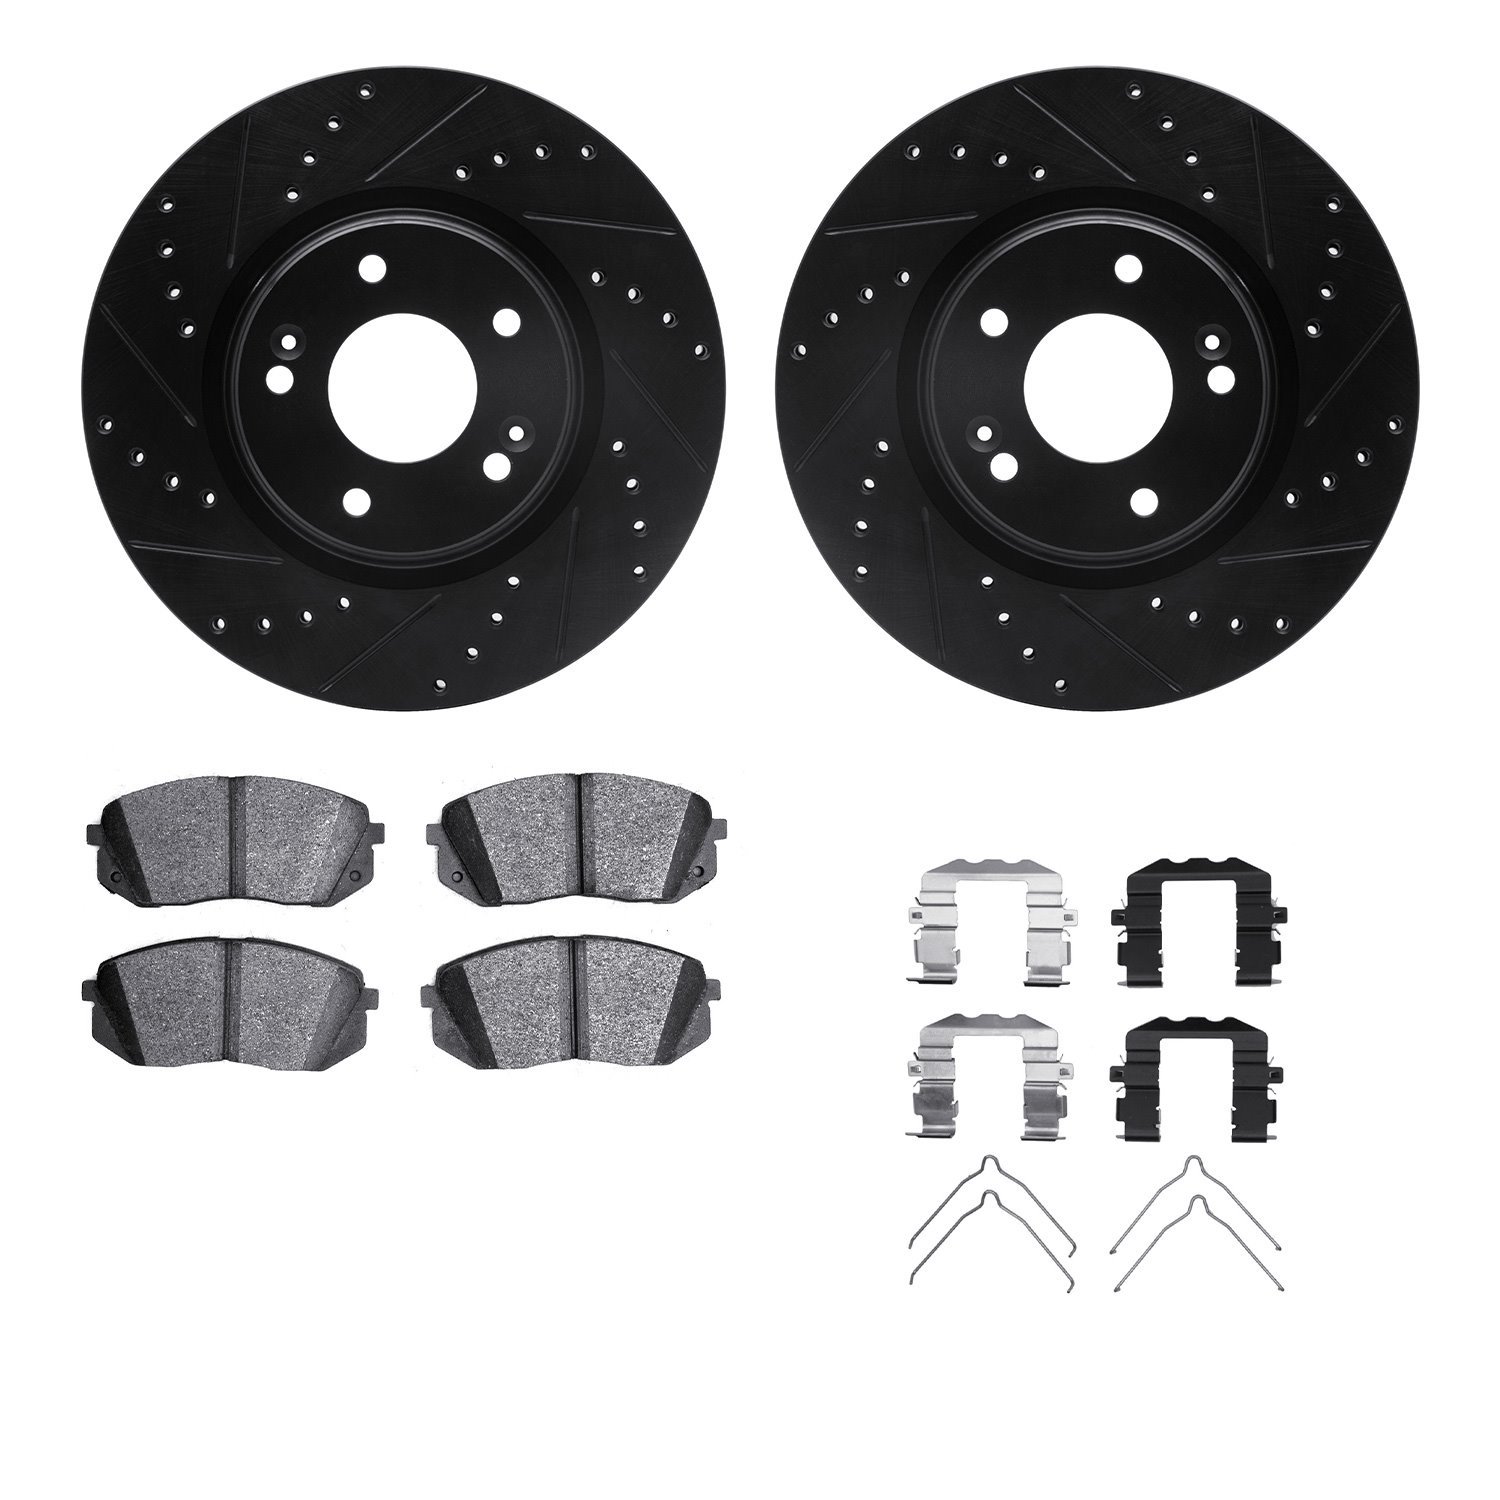 8312-03089 Drilled/Slotted Brake Rotors with 3000-Series Ceramic Brake Pads Kit & Hardware [Black], Fits Select Kia/Hyundai/Gene